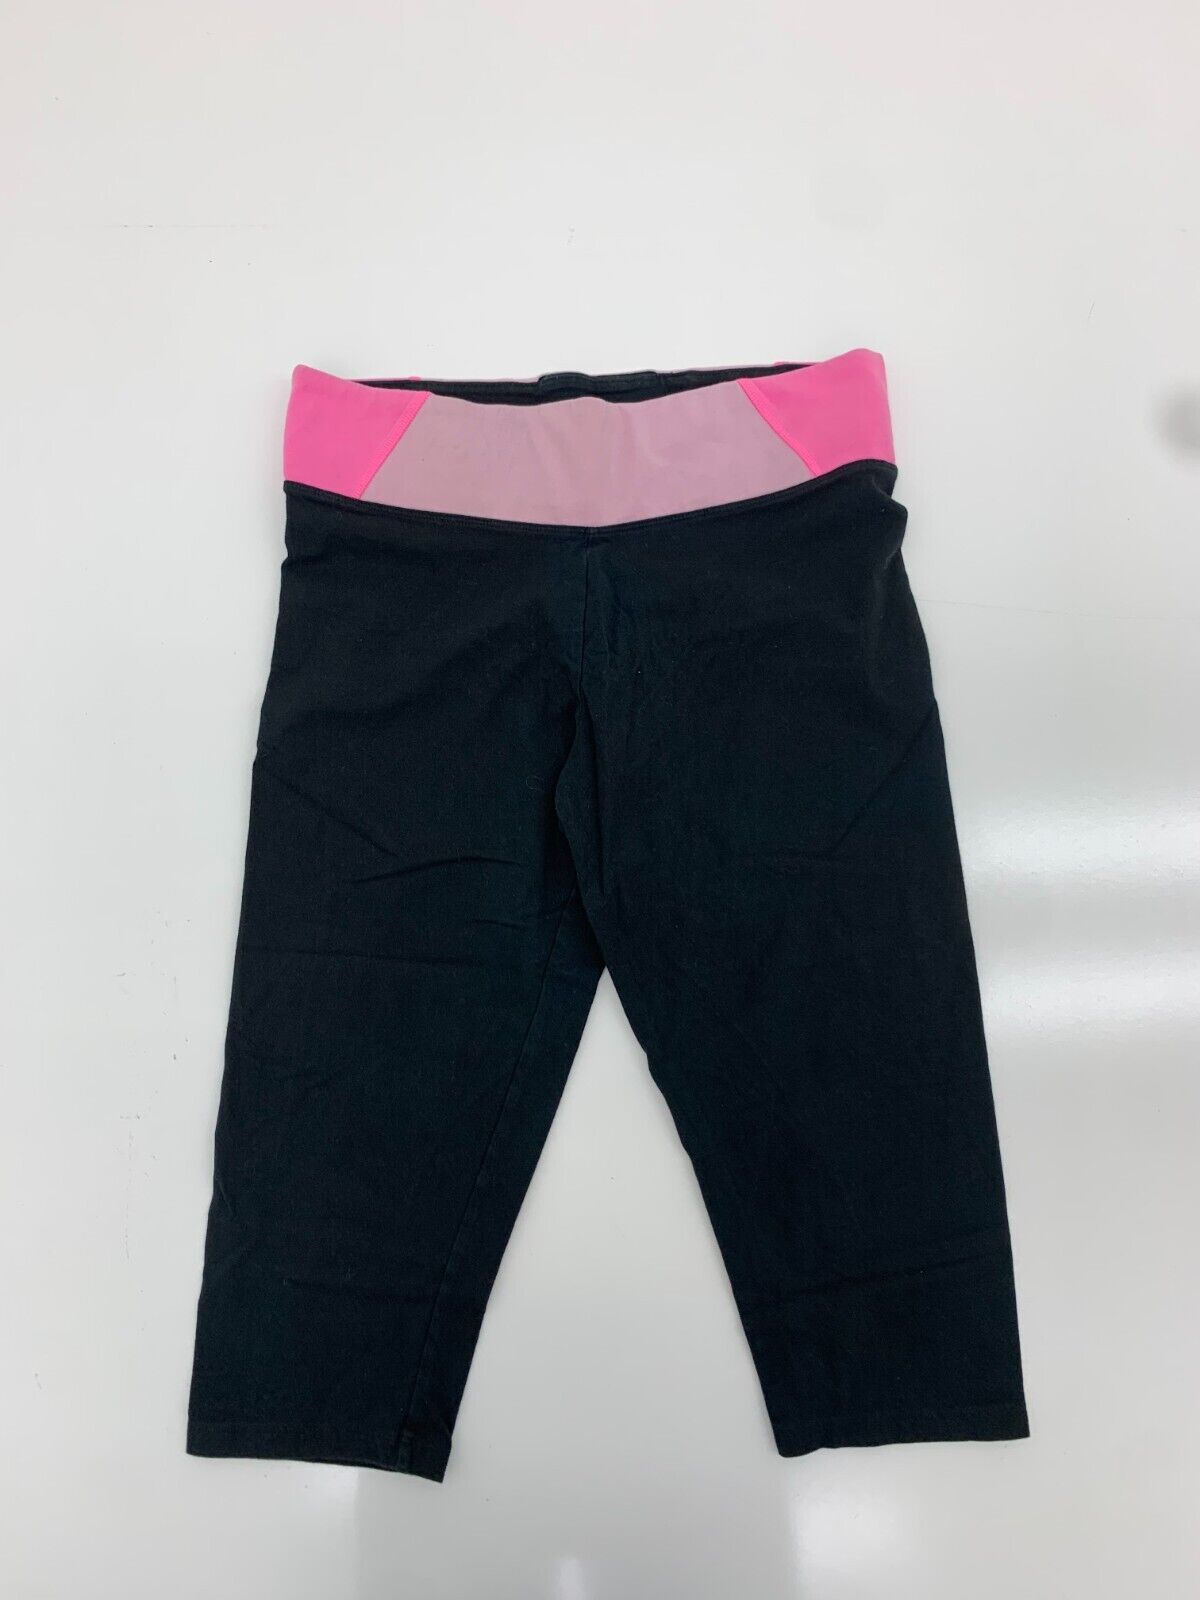 Victorias Secret Pink Womens Black Yoga Pants Size Medium - beyond exchange